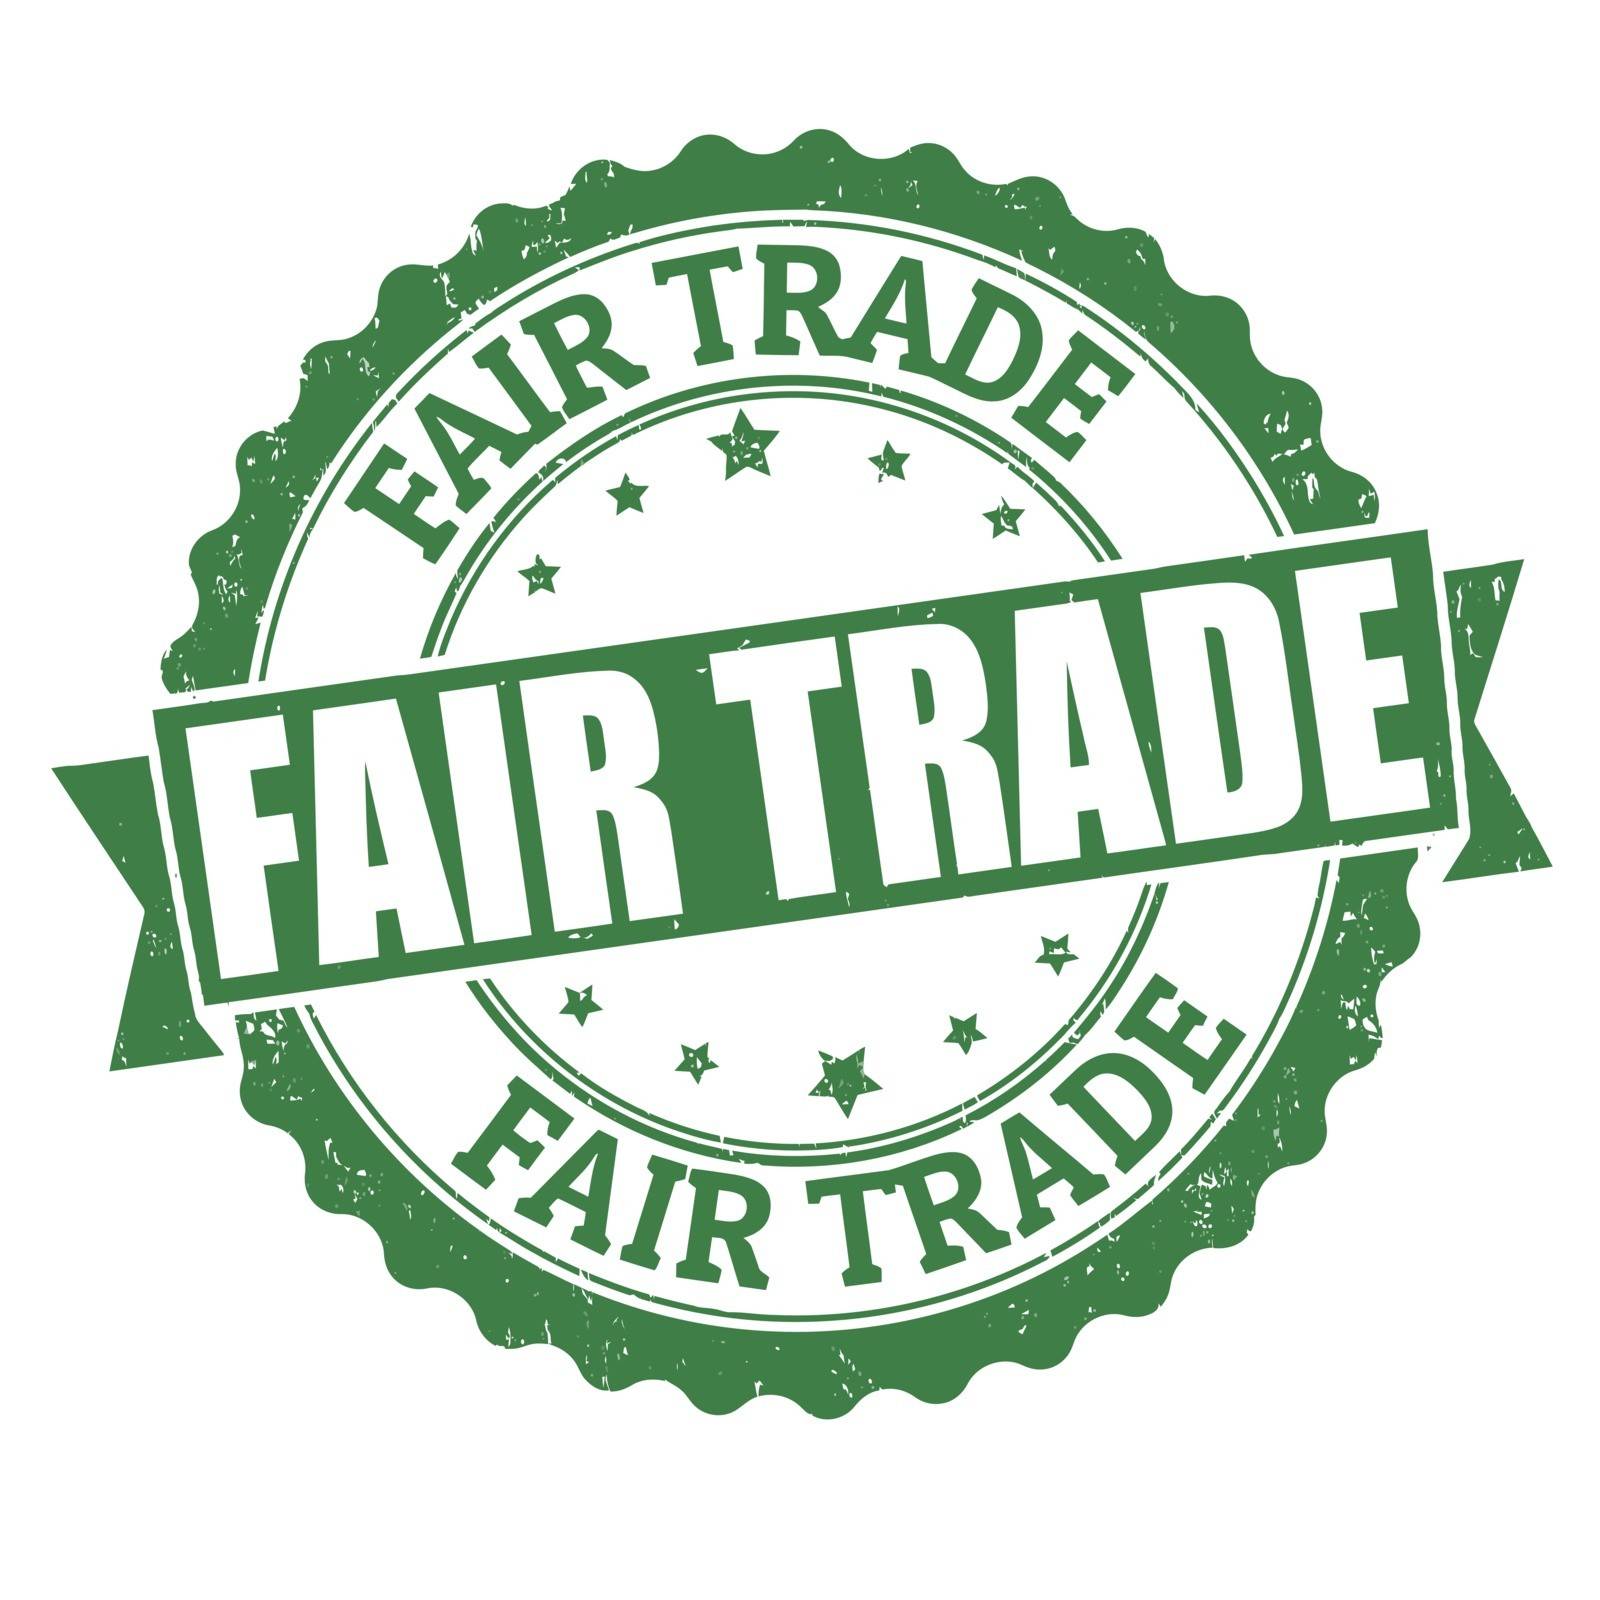 Fair trade grunge rubber stamp on white, vector illustration